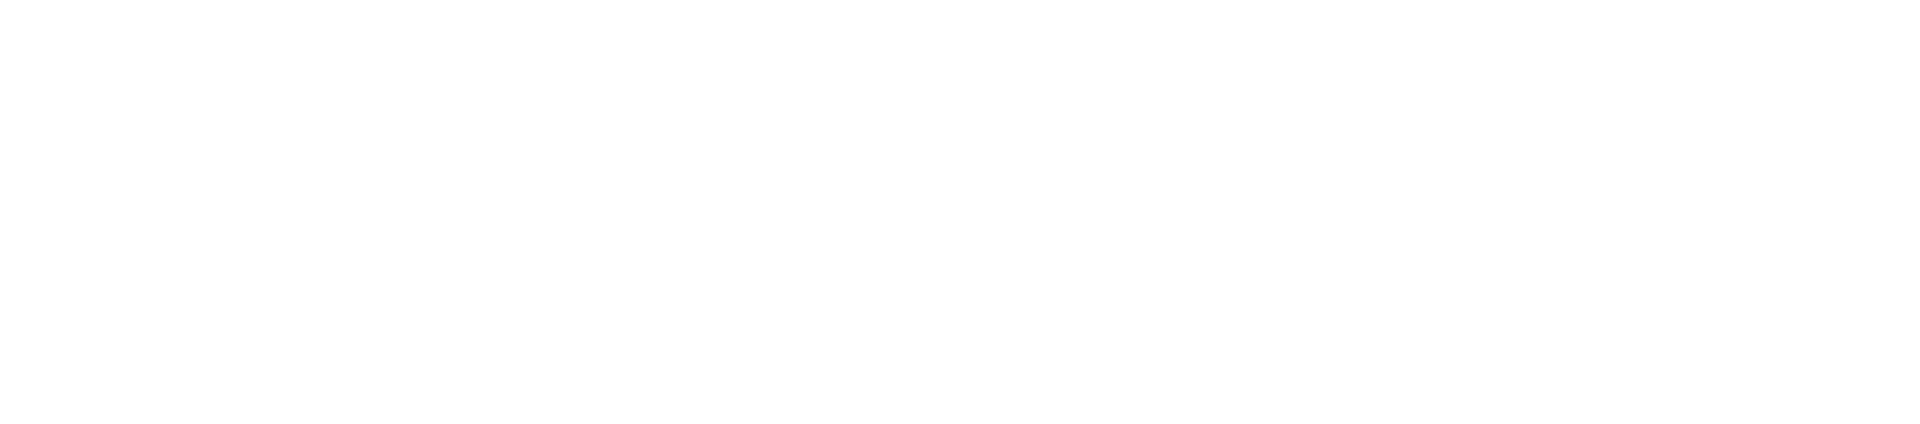 White Headspace logo